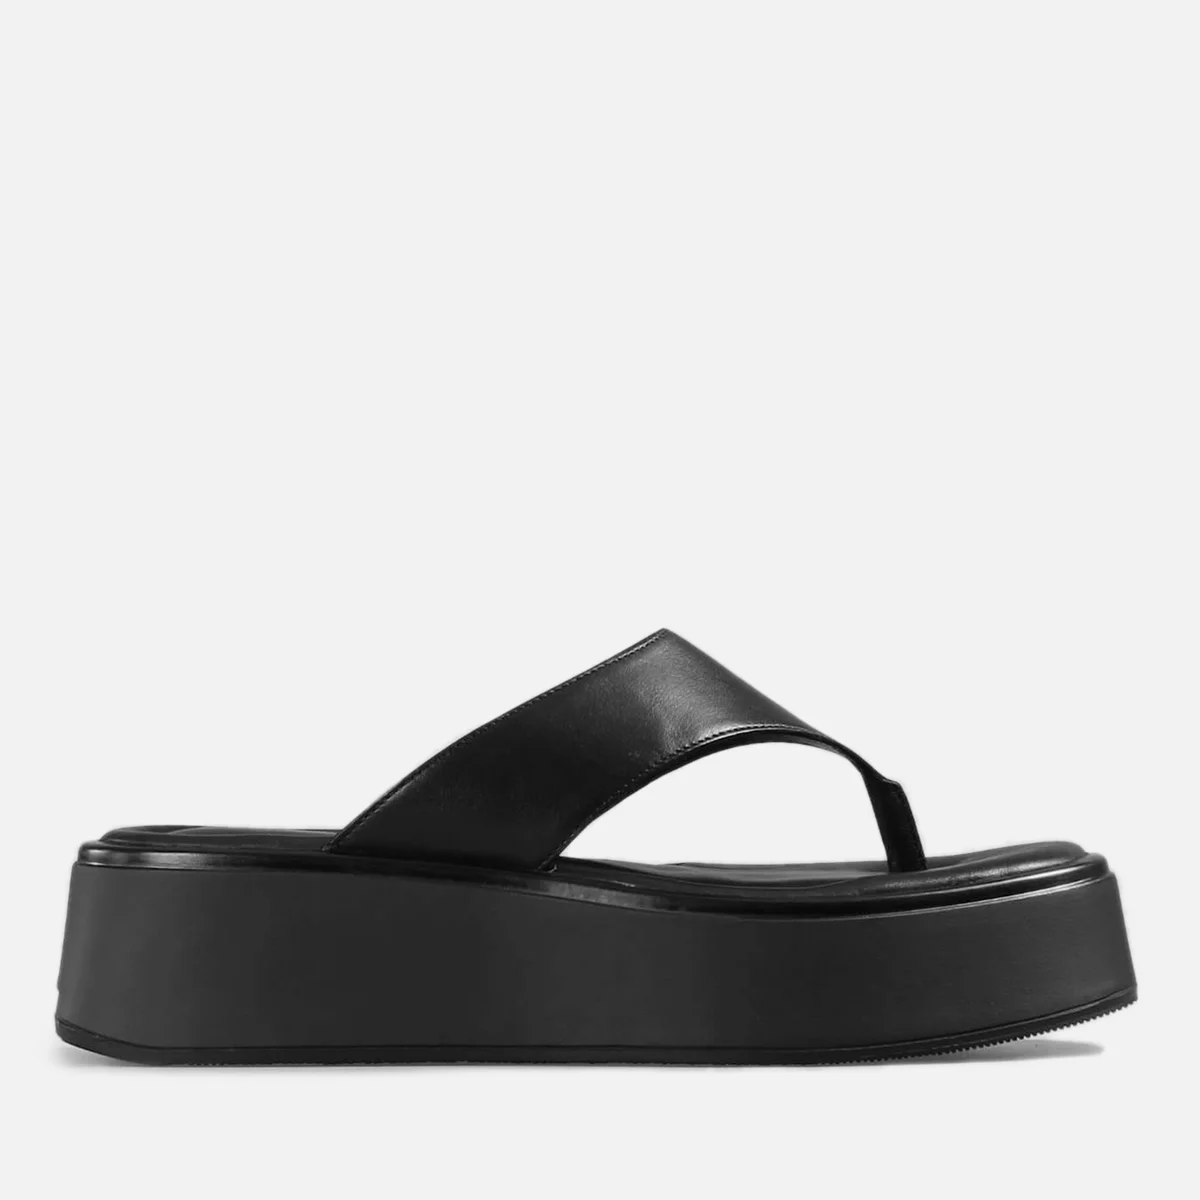 Vagabond Women's Courtney Leather Toe Post Sandals - Black/Black Image 1